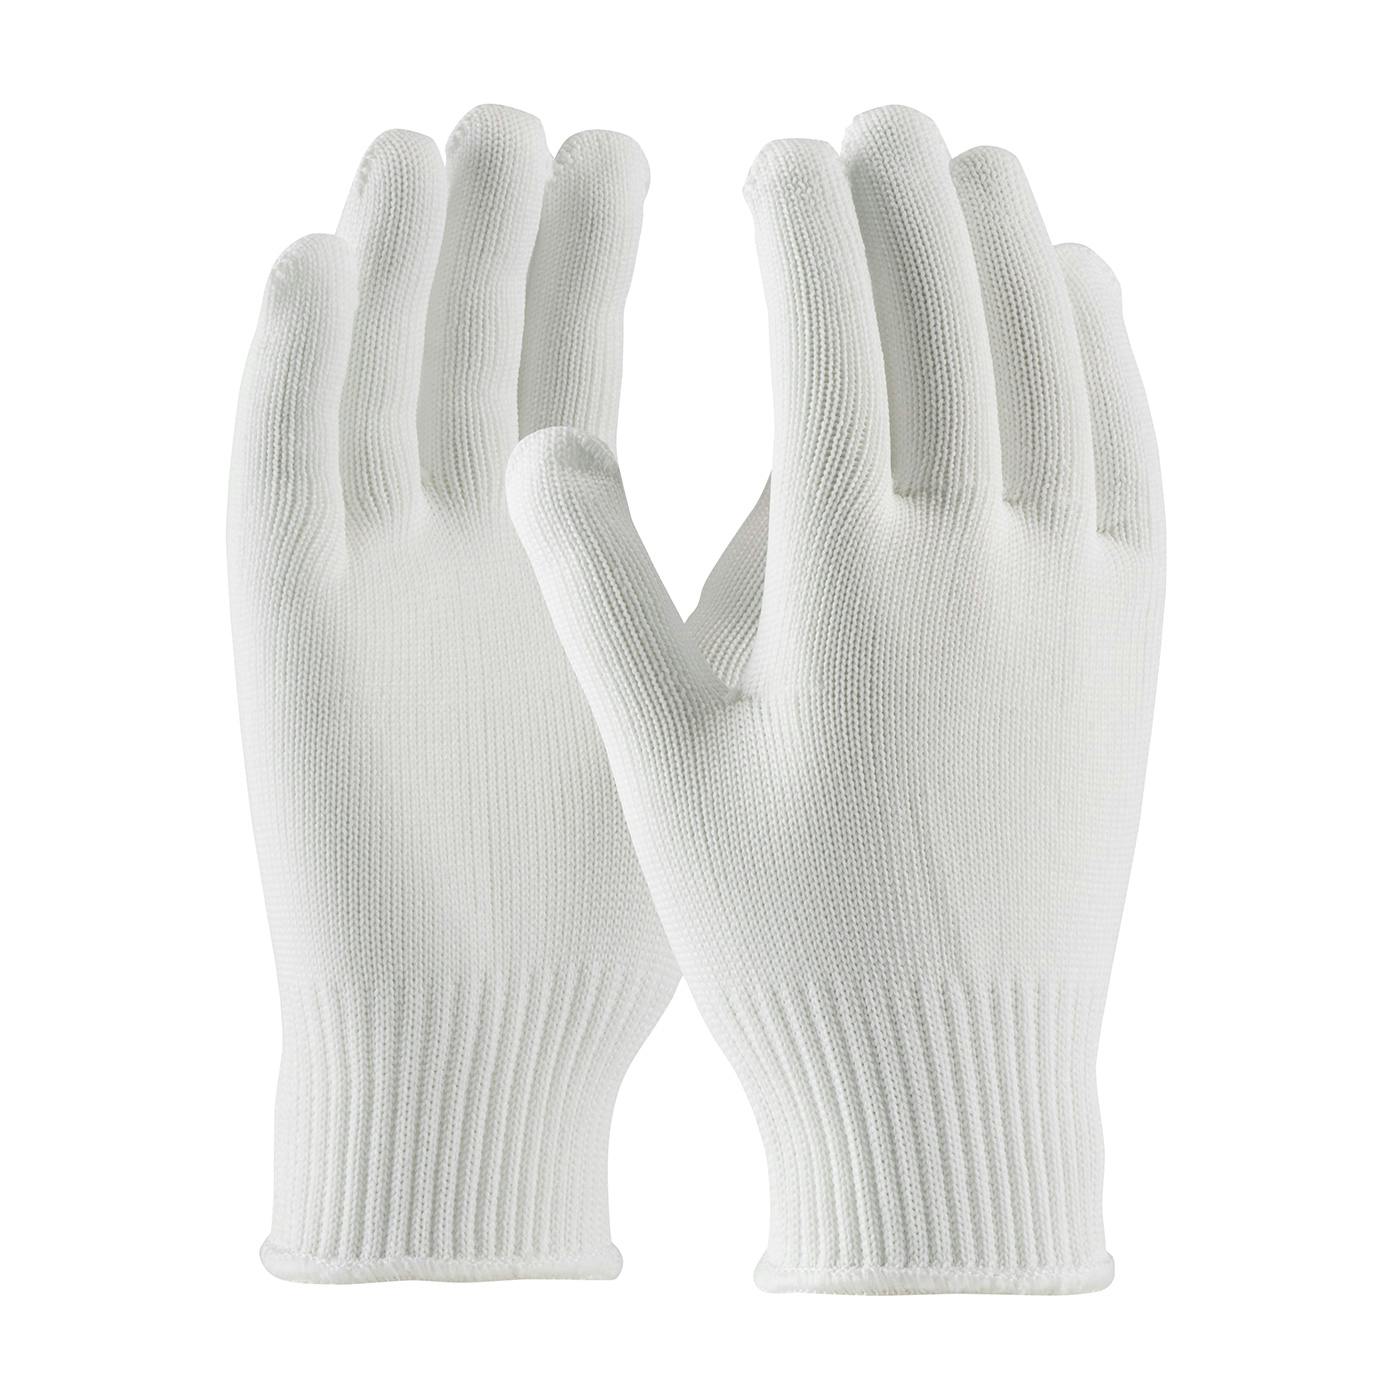 CleanTeam® Medium Weight Seamless Knit Stretch Polyester Clean Environment Glove - 10 Gauge (40-C2210)